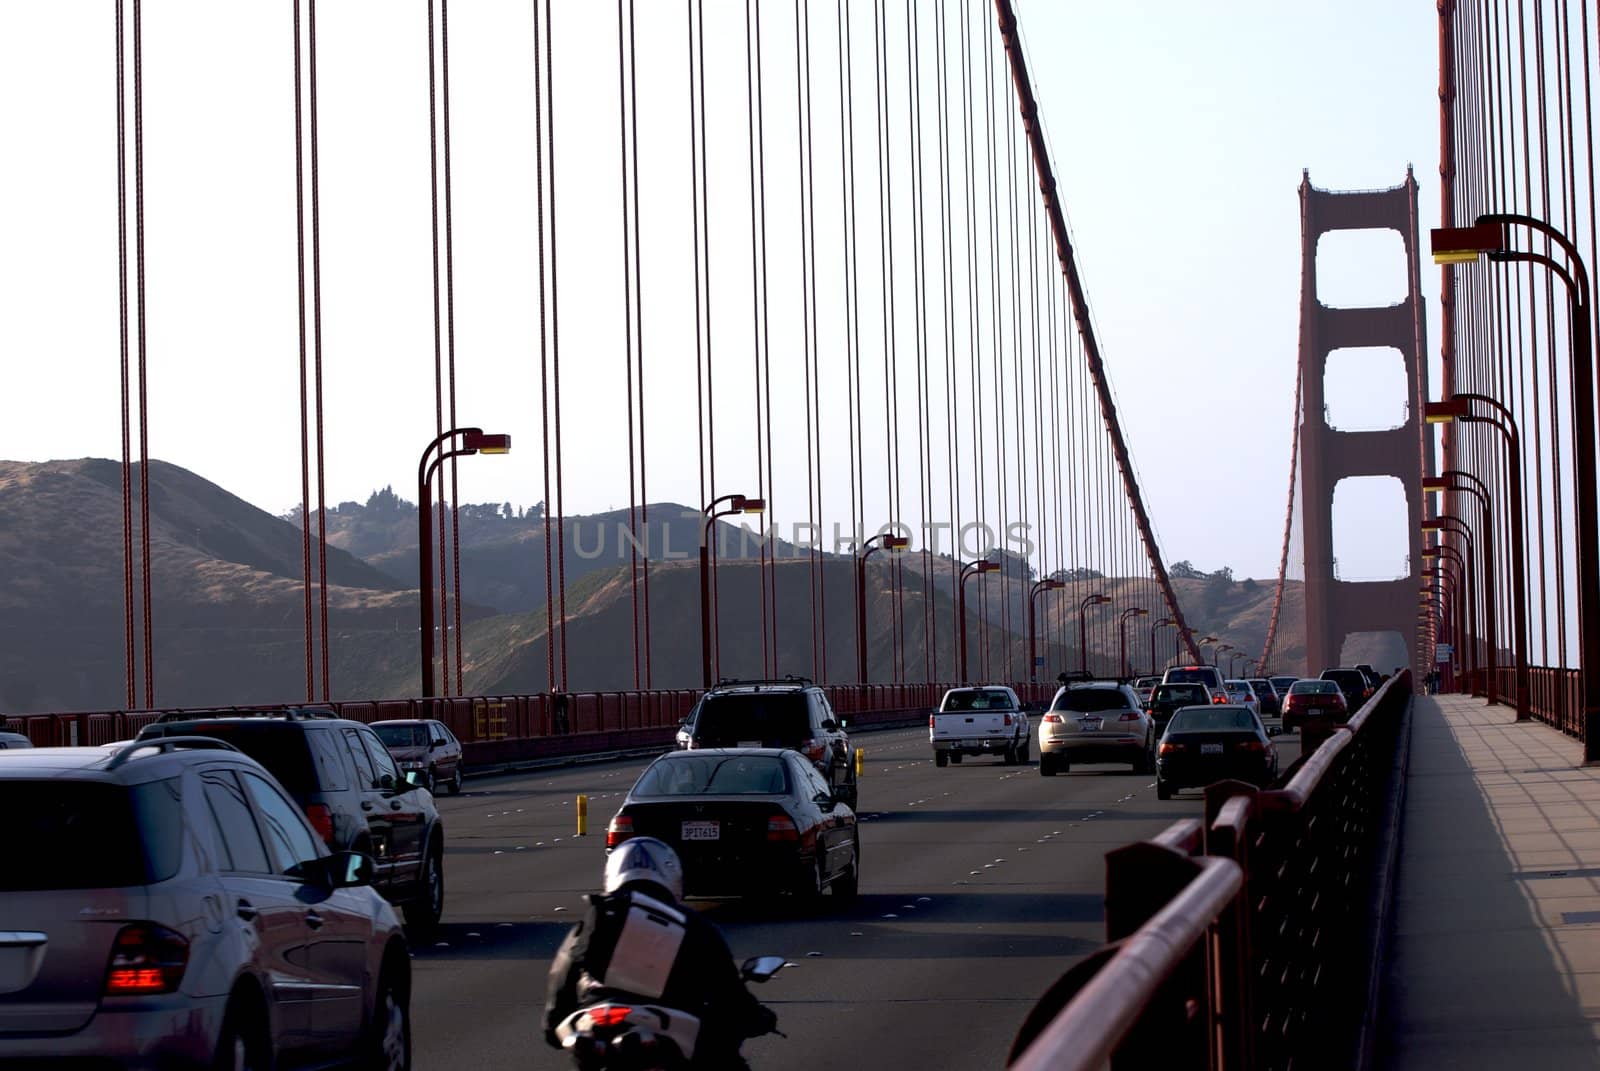 California, San Francisco, Golden Gate Bridge by jedphoto